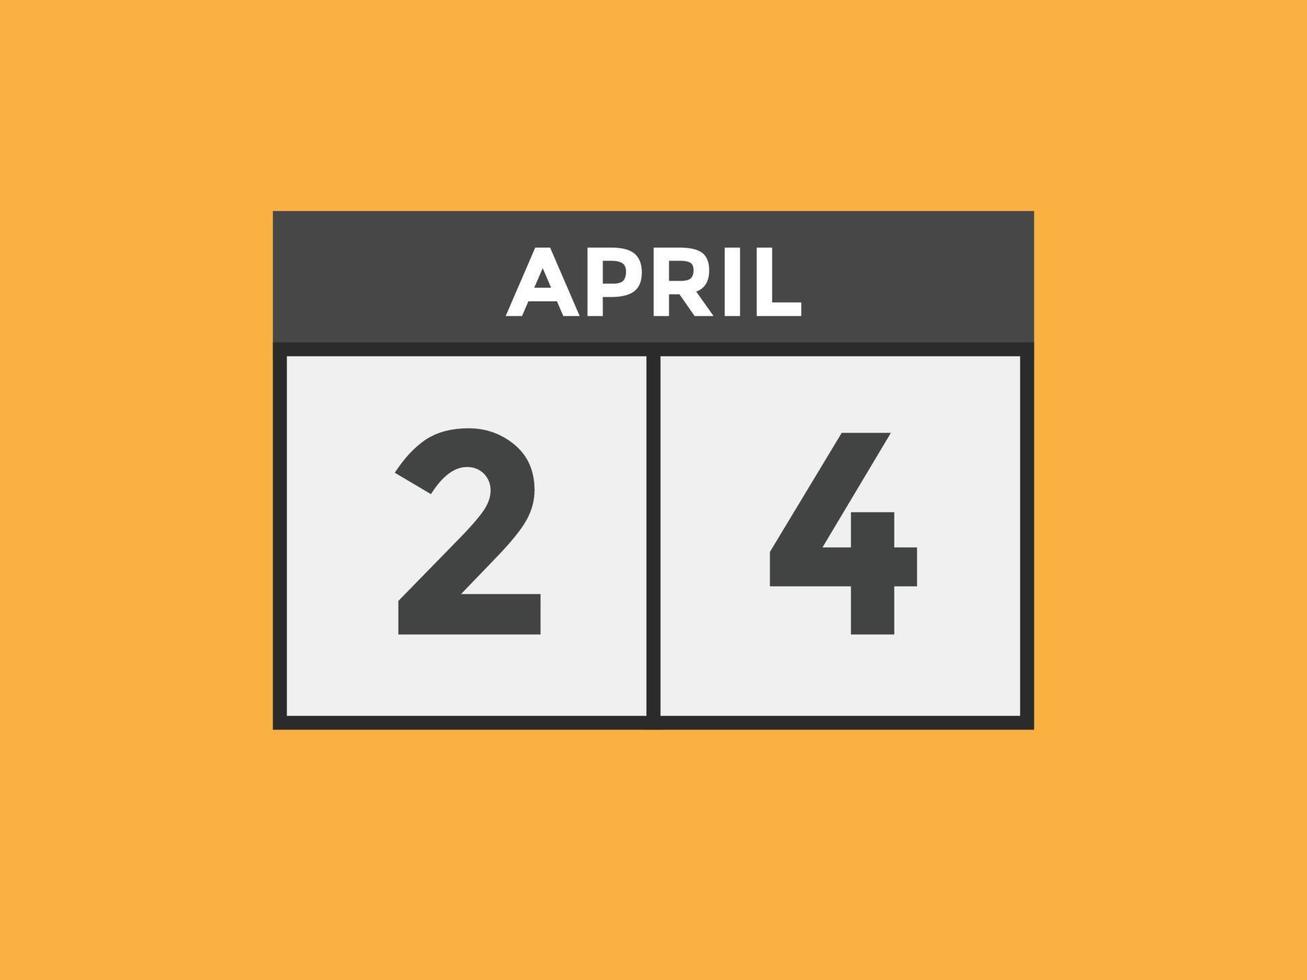 april 24 kalender påminnelse. 24:e april dagligen kalender ikon mall. kalender 24:e april ikon design mall. vektor illustration